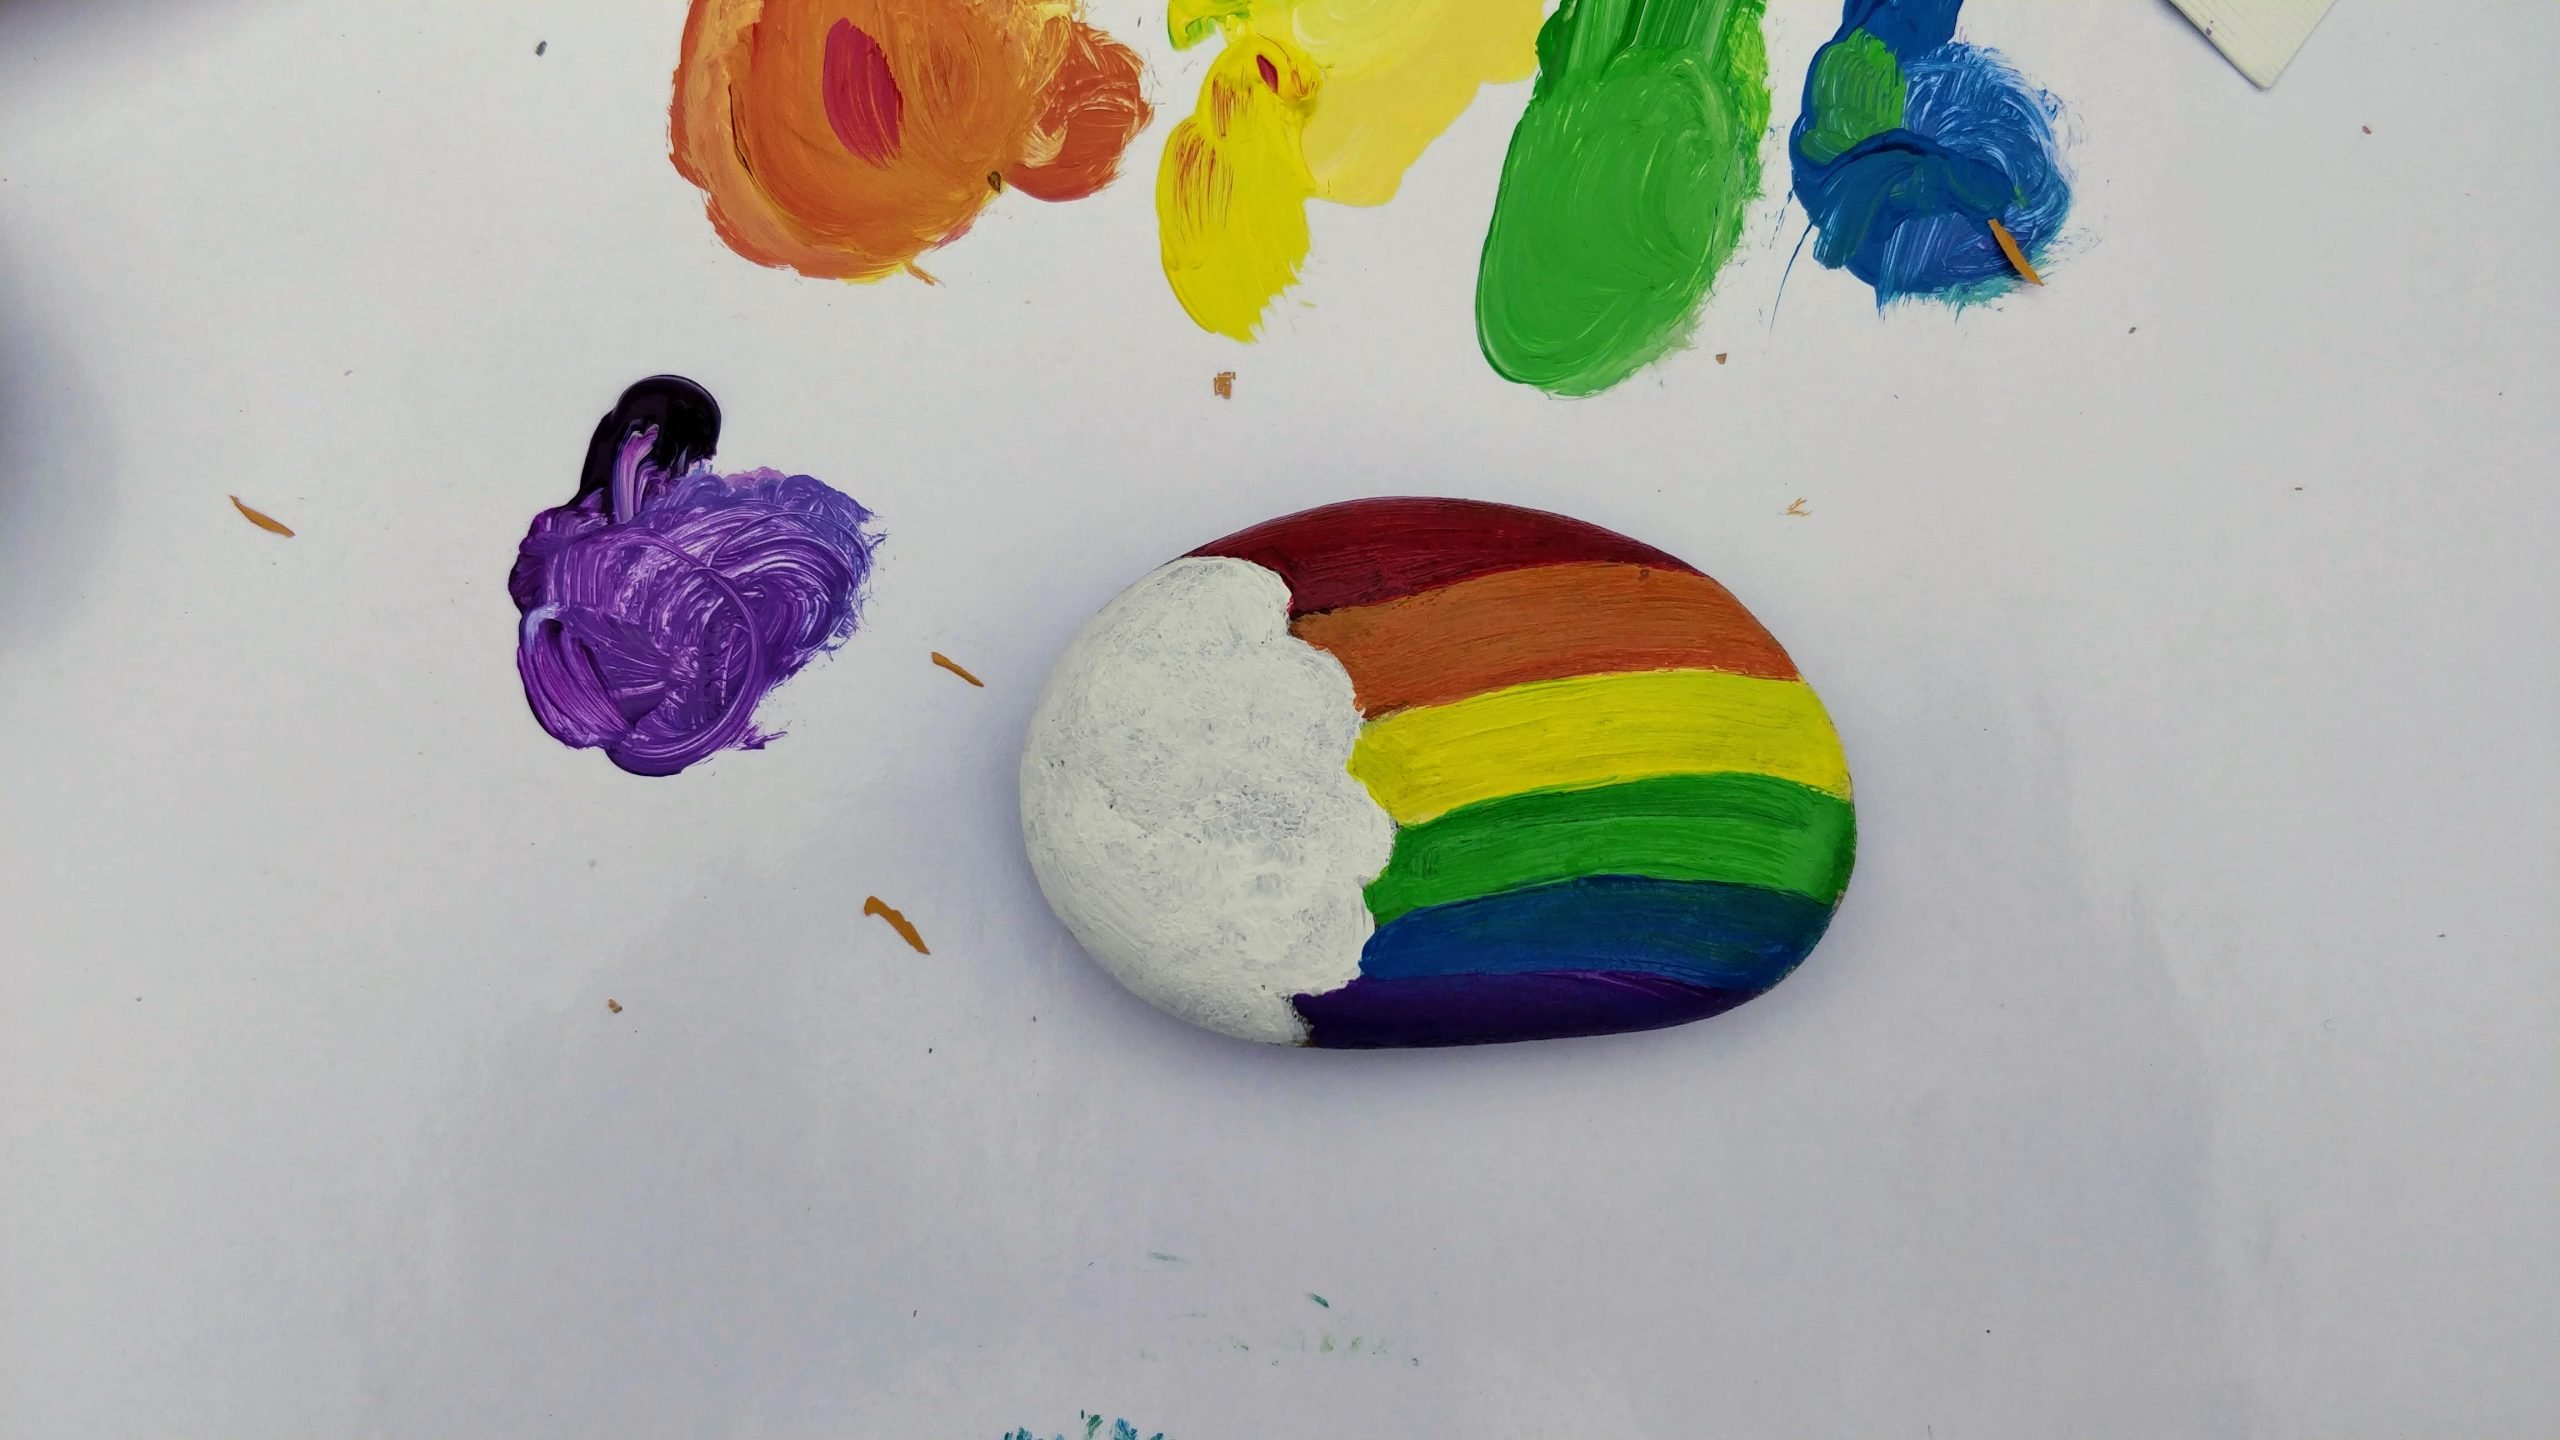 How to paint rocks rainbow #2